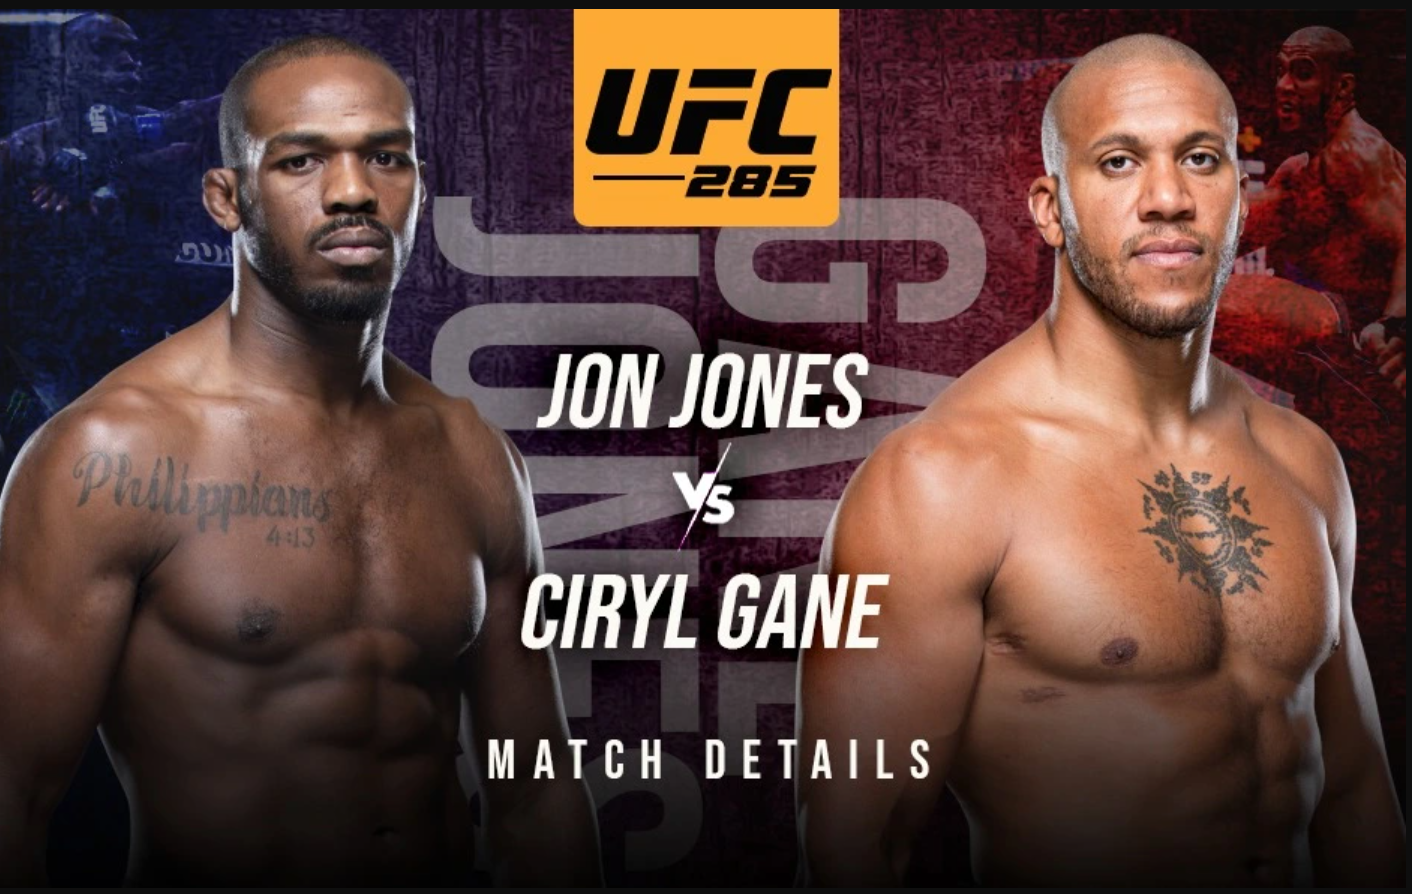 Jon Jones vs Ciryl Gane